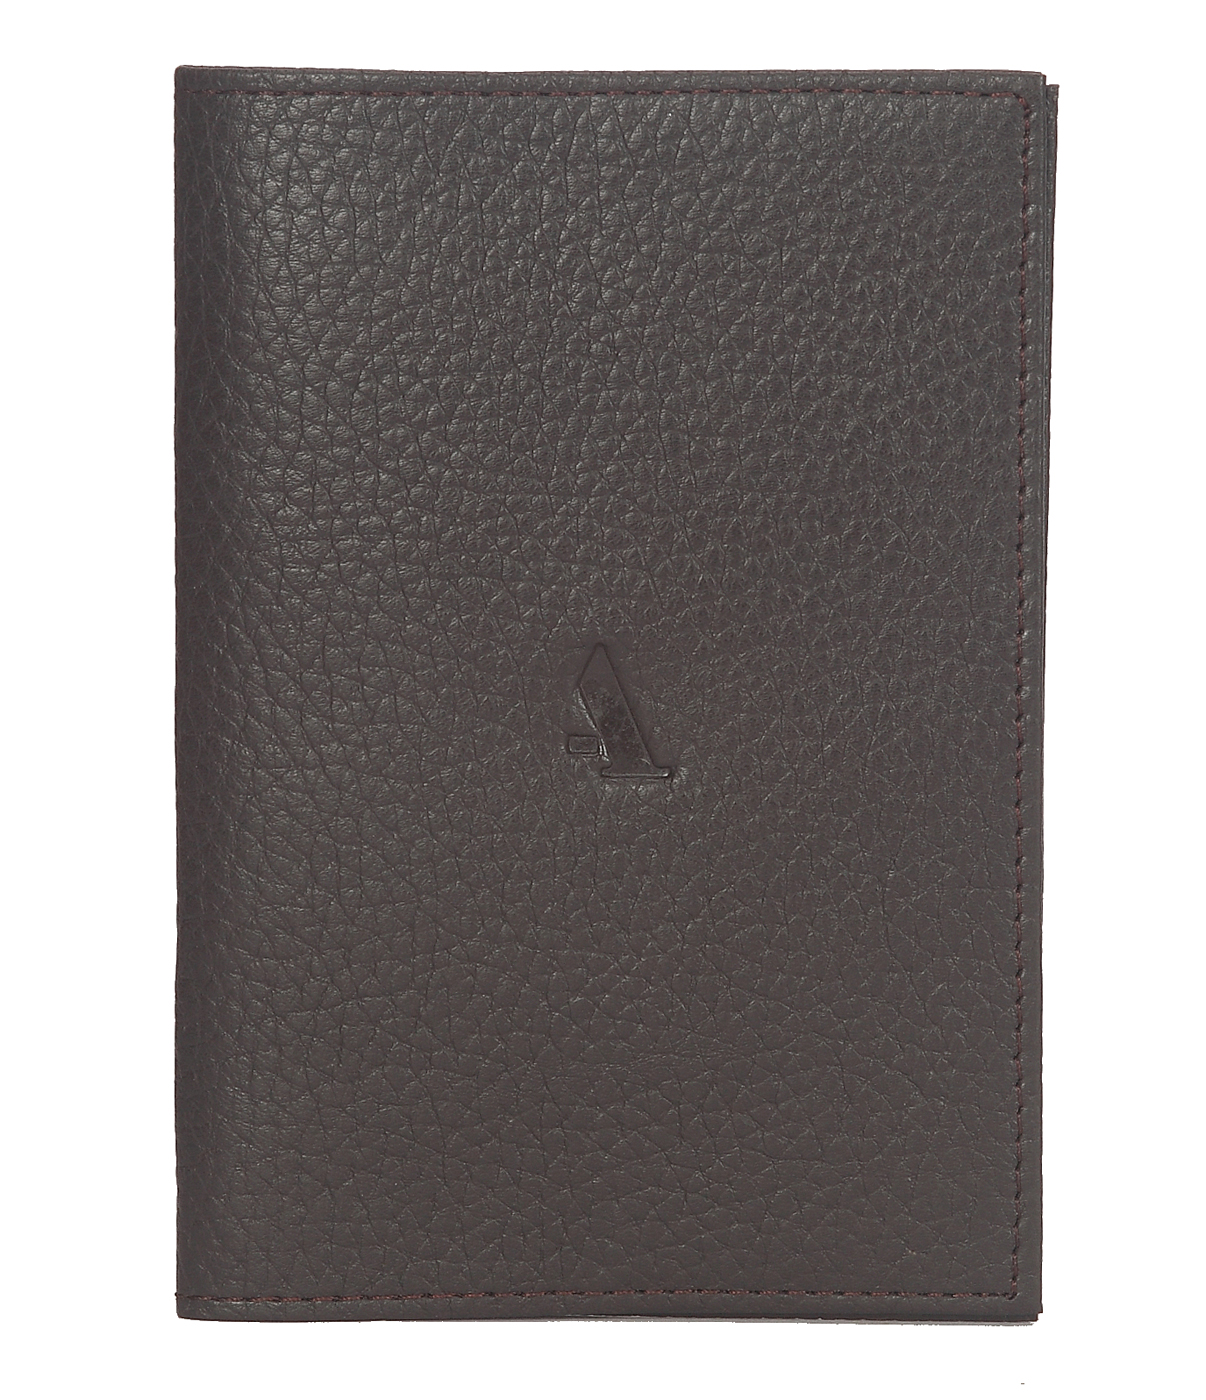 Travel Essential--Passport cover in Genuine Leather - Black